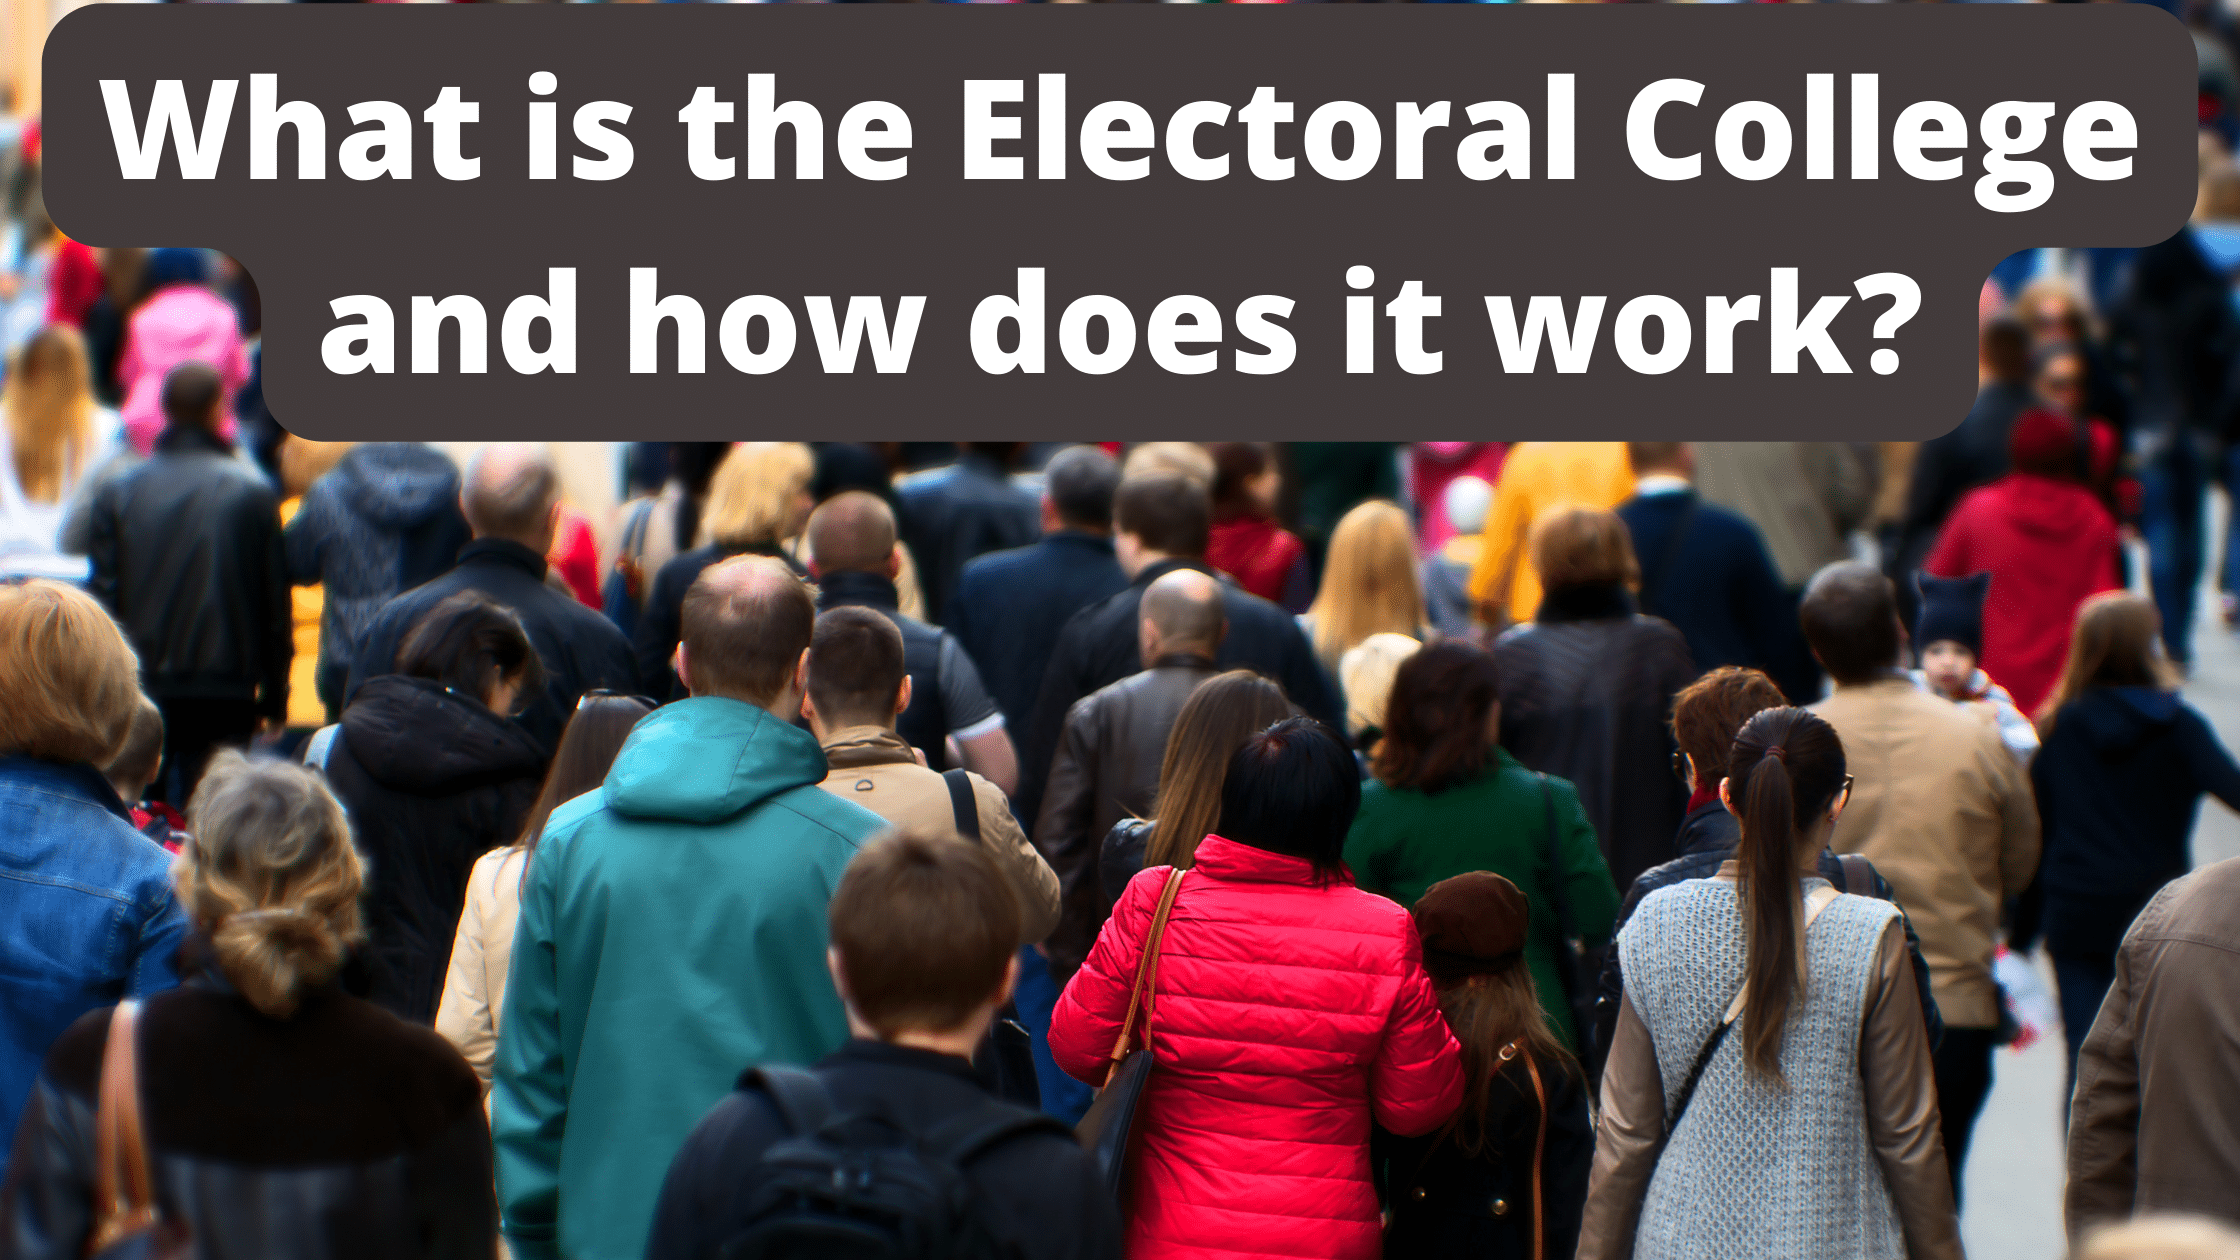 Keywords: electoral college, work.